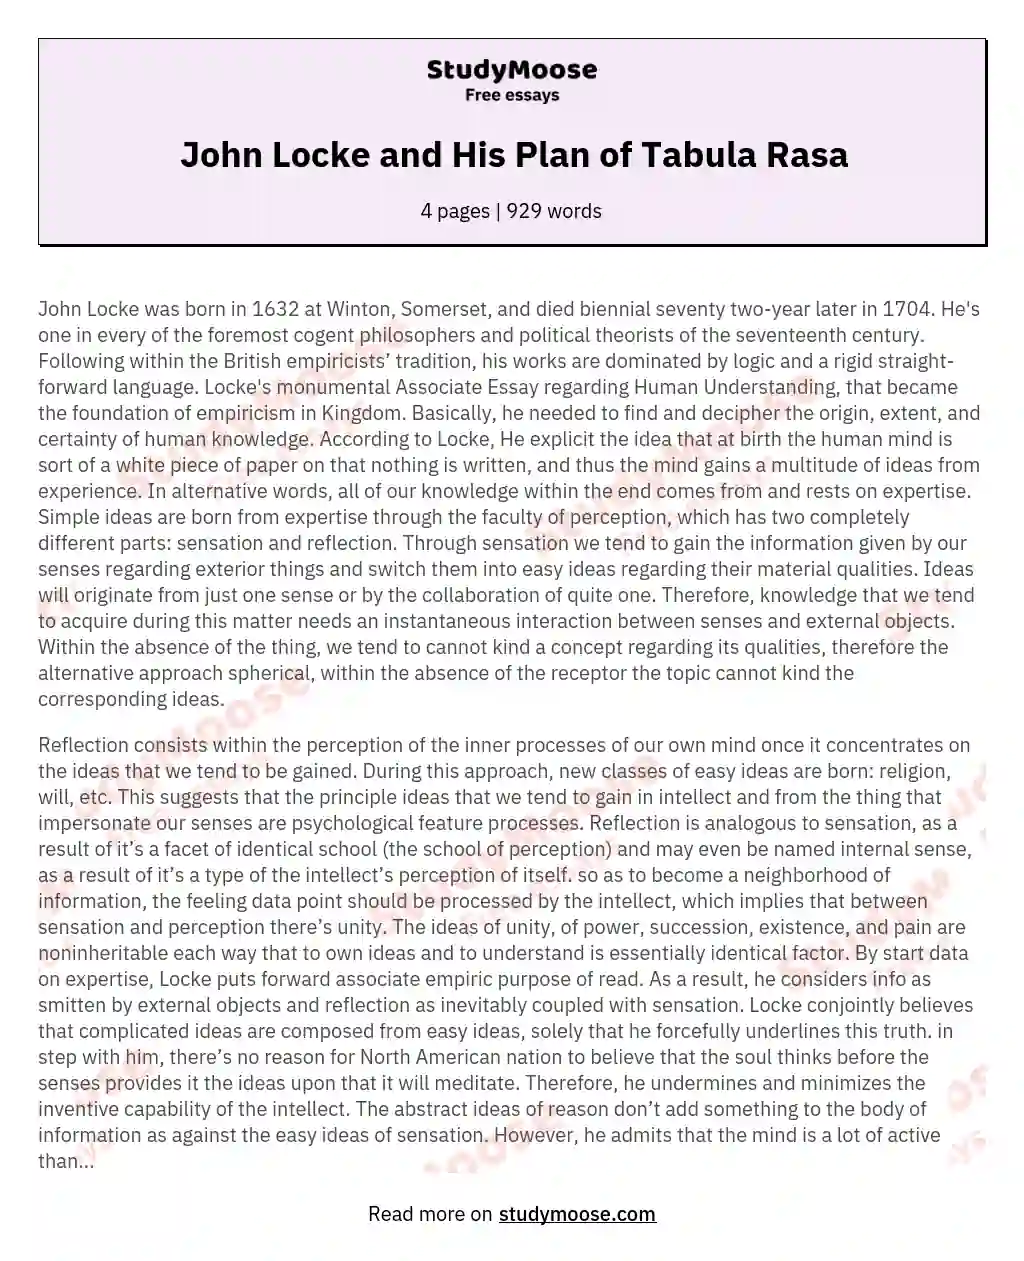 John Locke and His Plan of Tabula Rasa essay